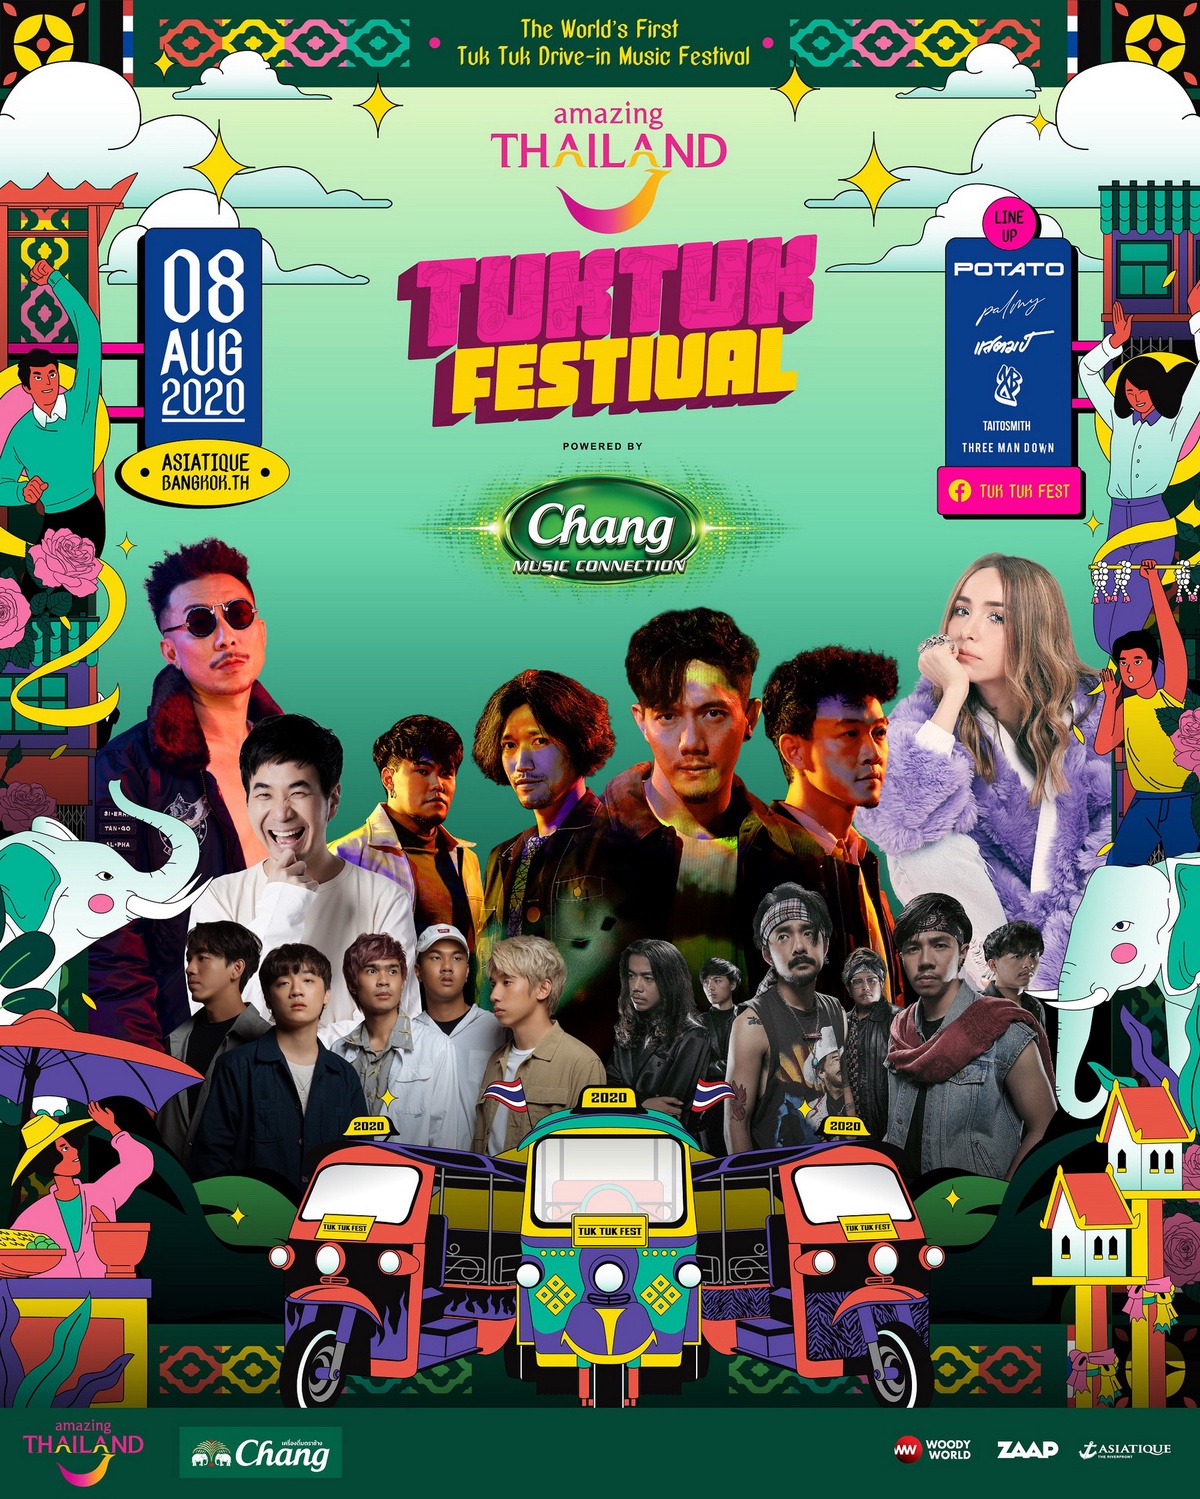 Gossip News: เอเชียทีค เดอะ ริเวอร์ฟร้อนท์ จัดคอนเสิร์ตแบบ New Normal ในงาน Amazing Thailand TUK TUK Festival Powered by Chang Music Connection